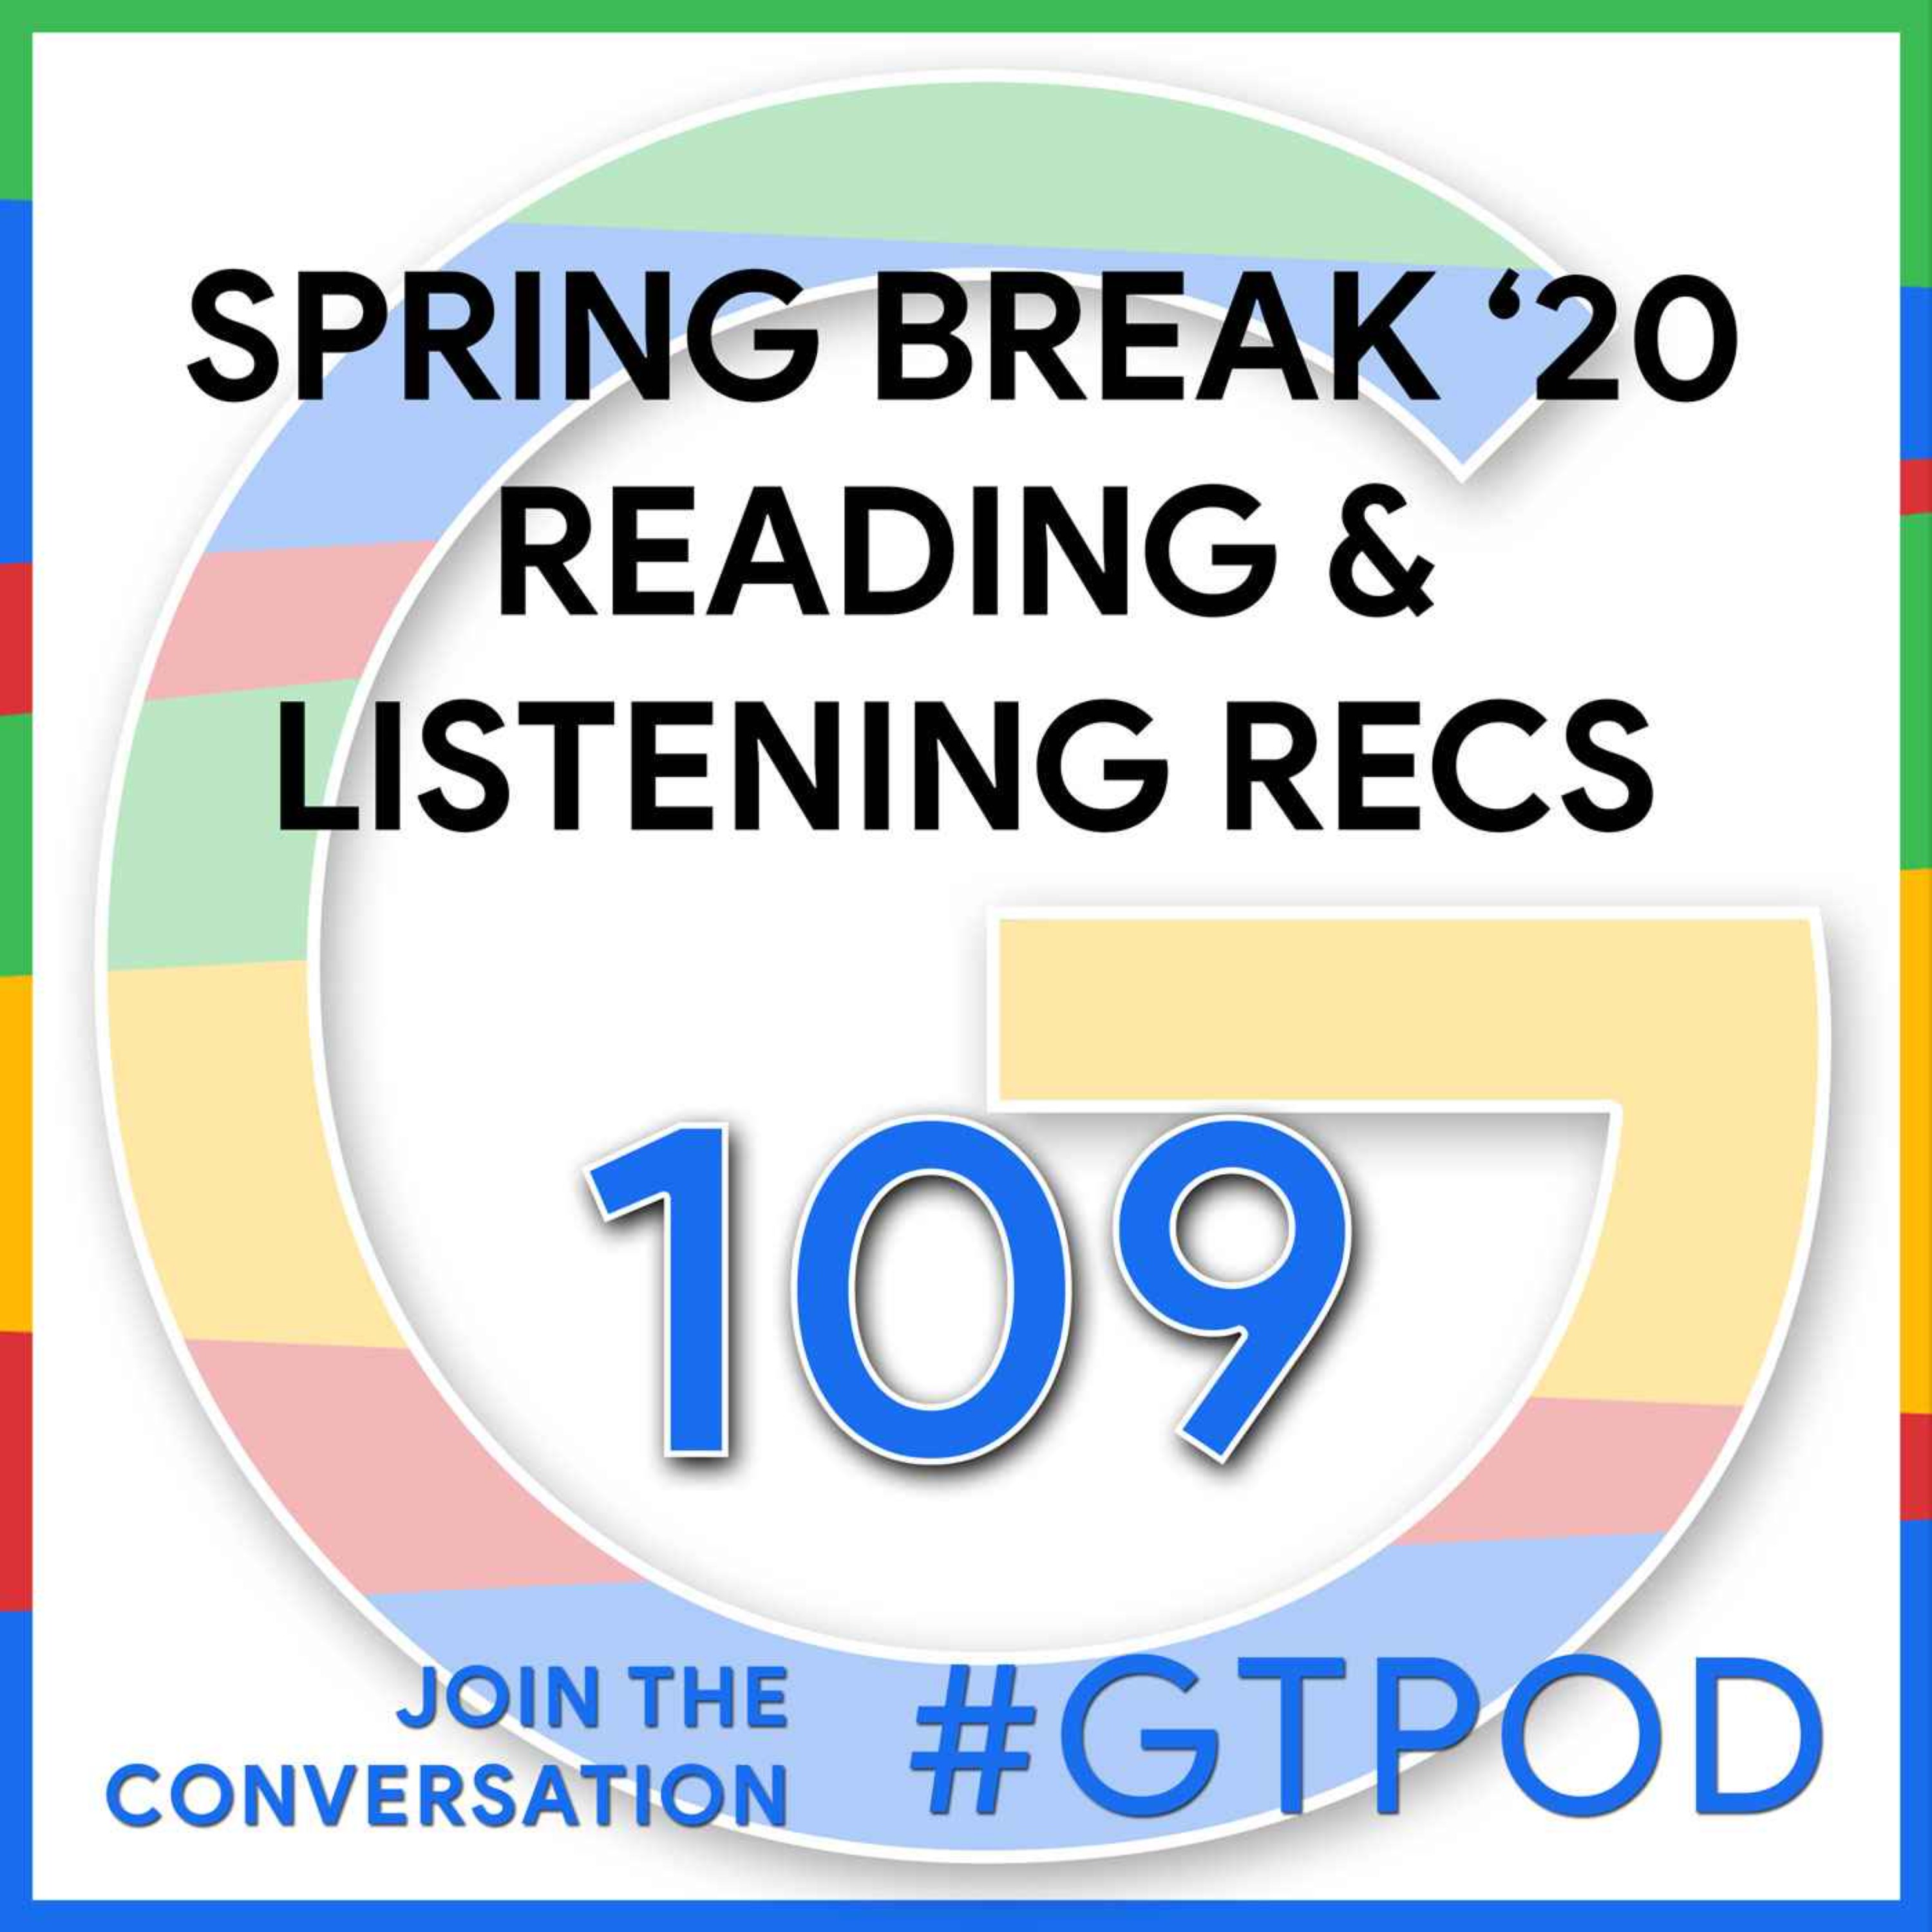 Spring Break Reading & Listening Recommendations - GTP109